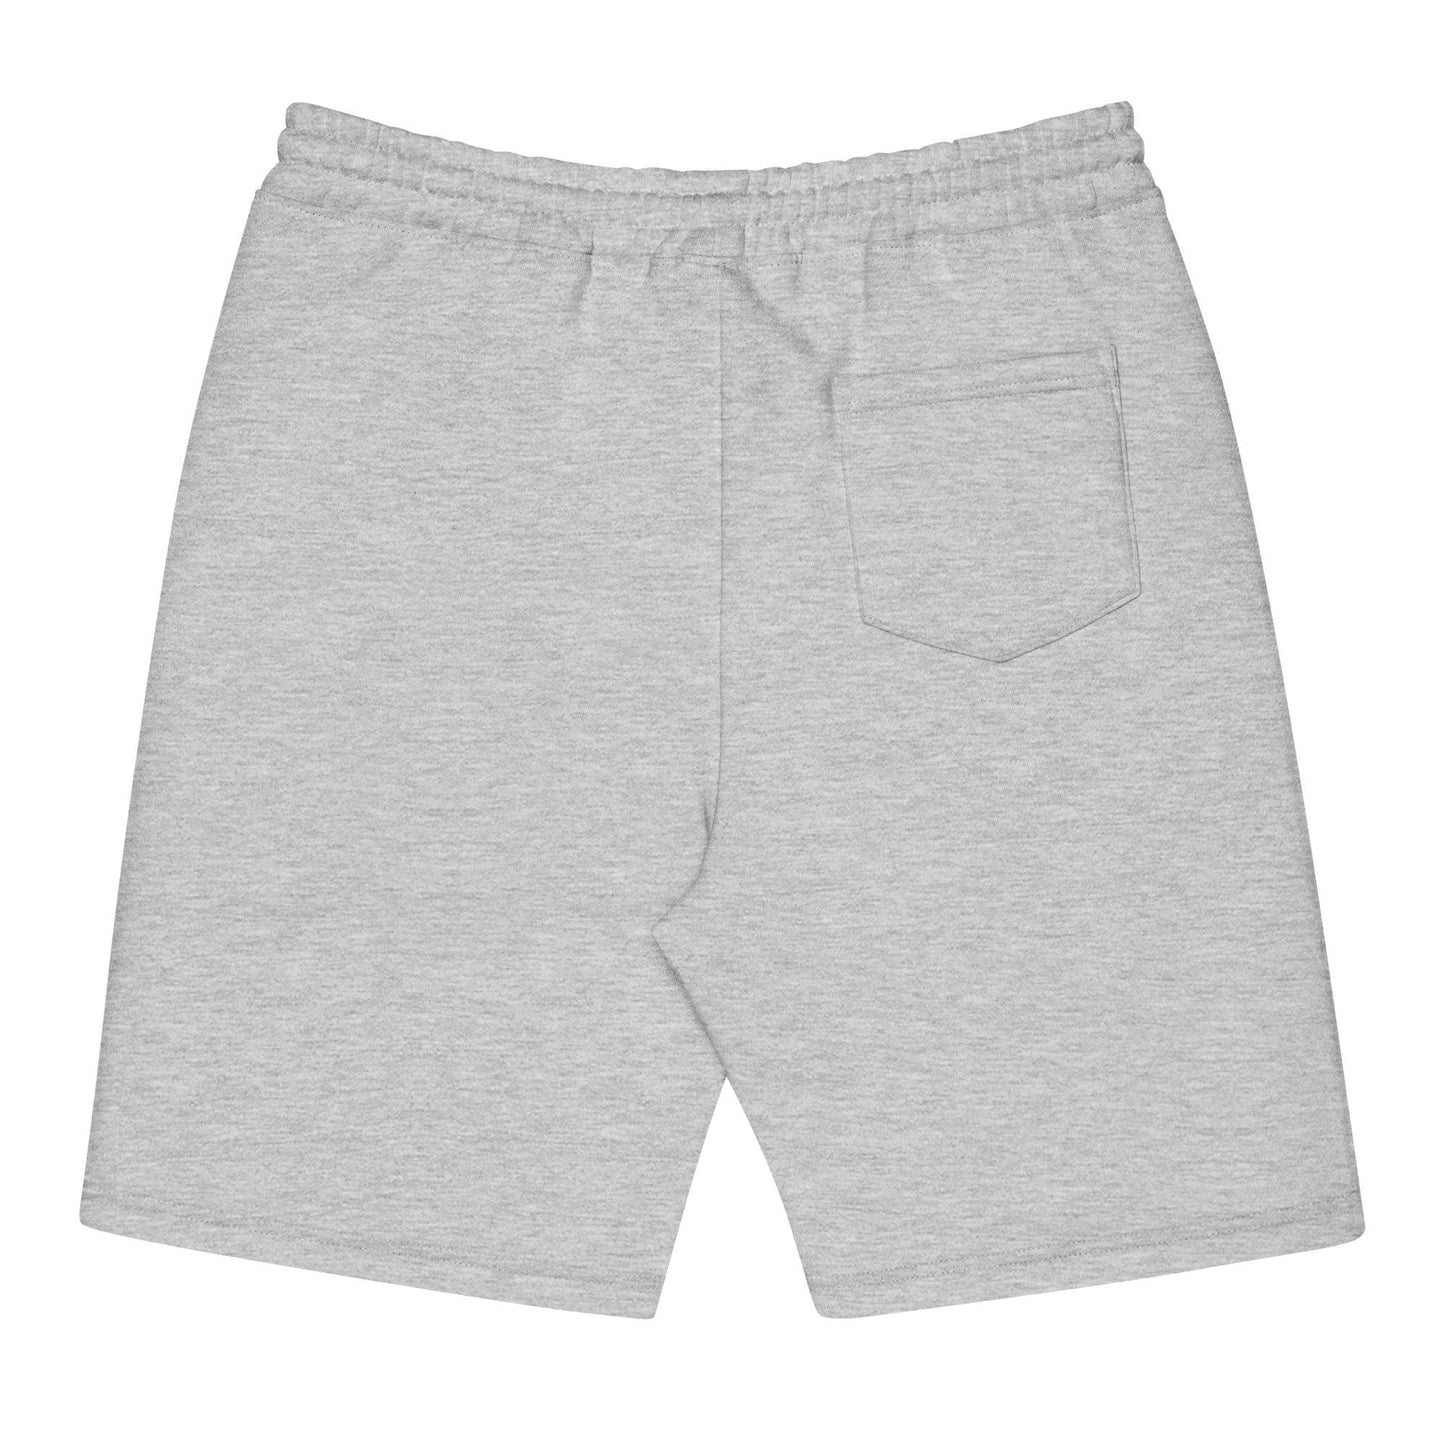 TimothyJames Men's Core Fleece Shorts Grey - TimothyJames